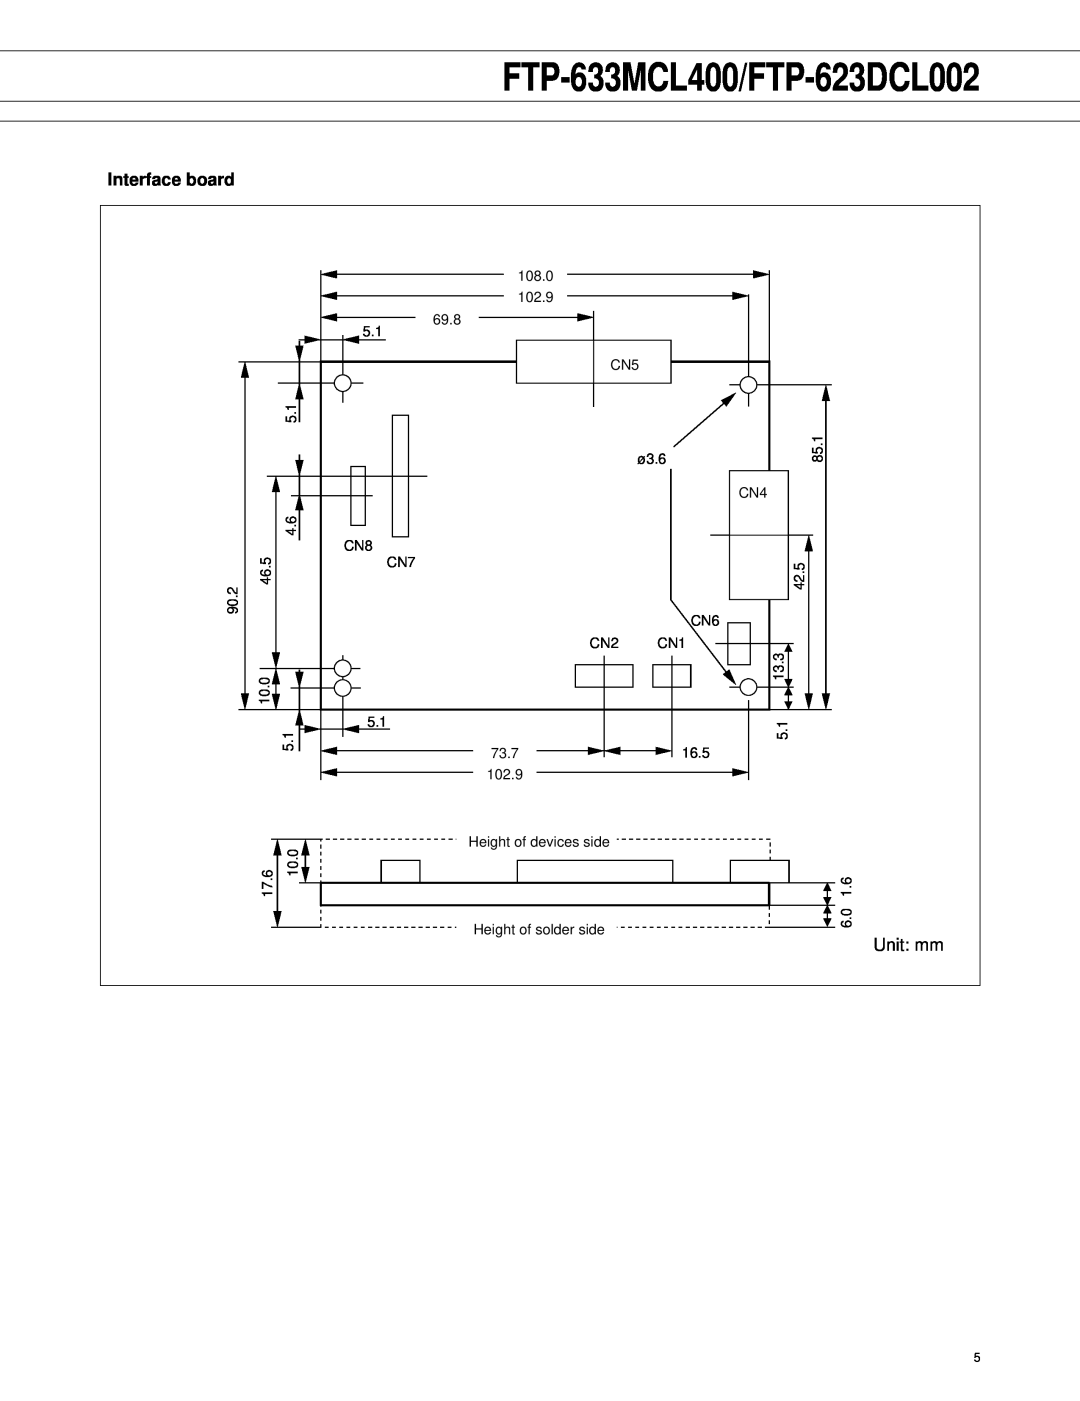 Fujitsu manual Interface board, FTP-633MCL400/FTP-623DCL002 